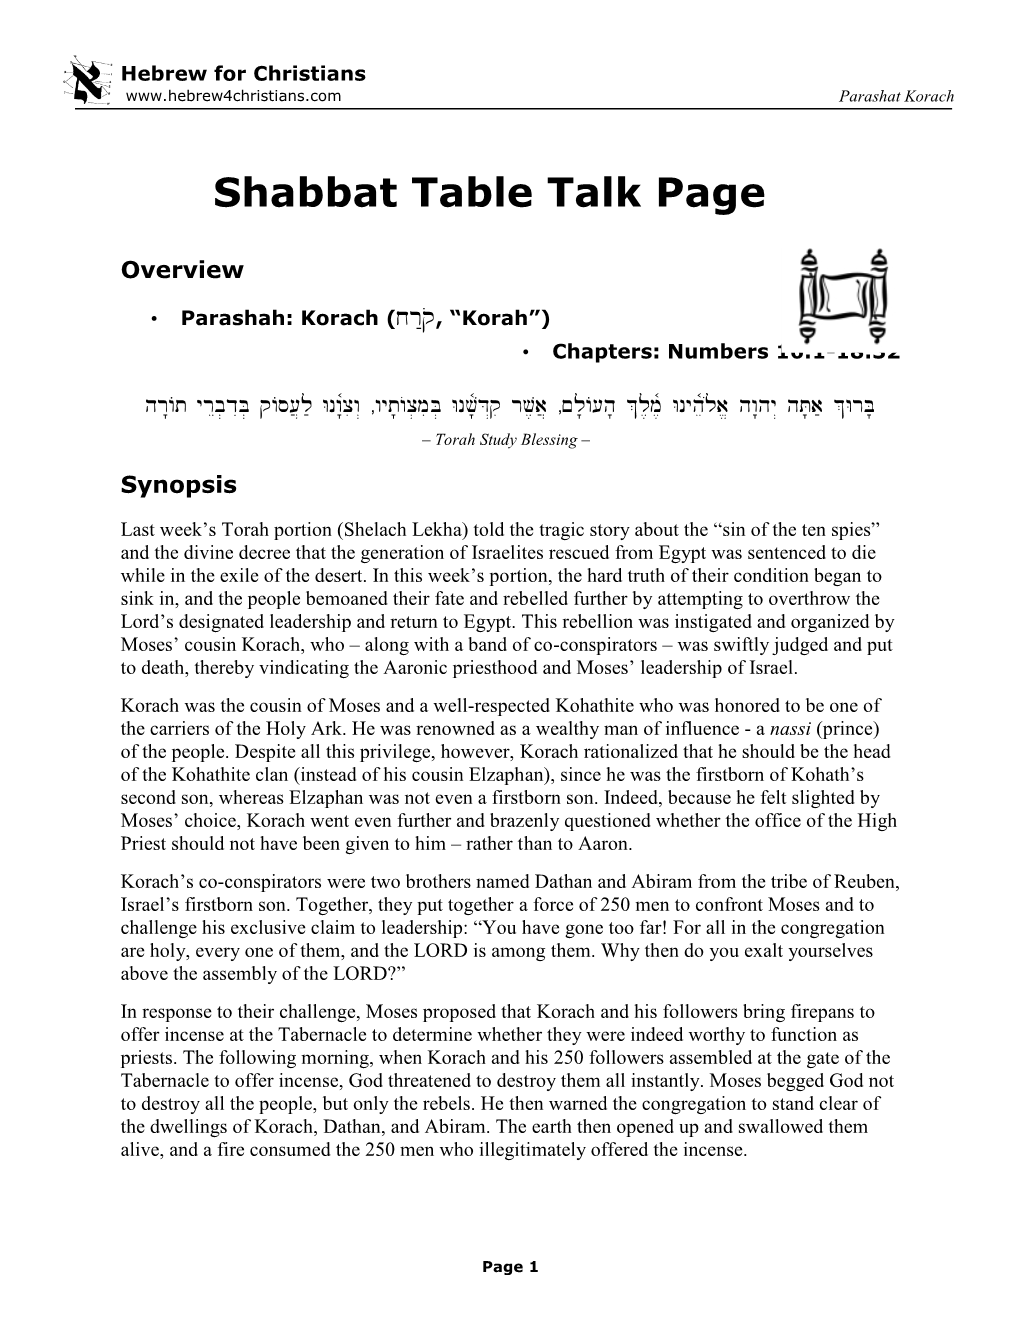 Shabbat Table Talk for Korach